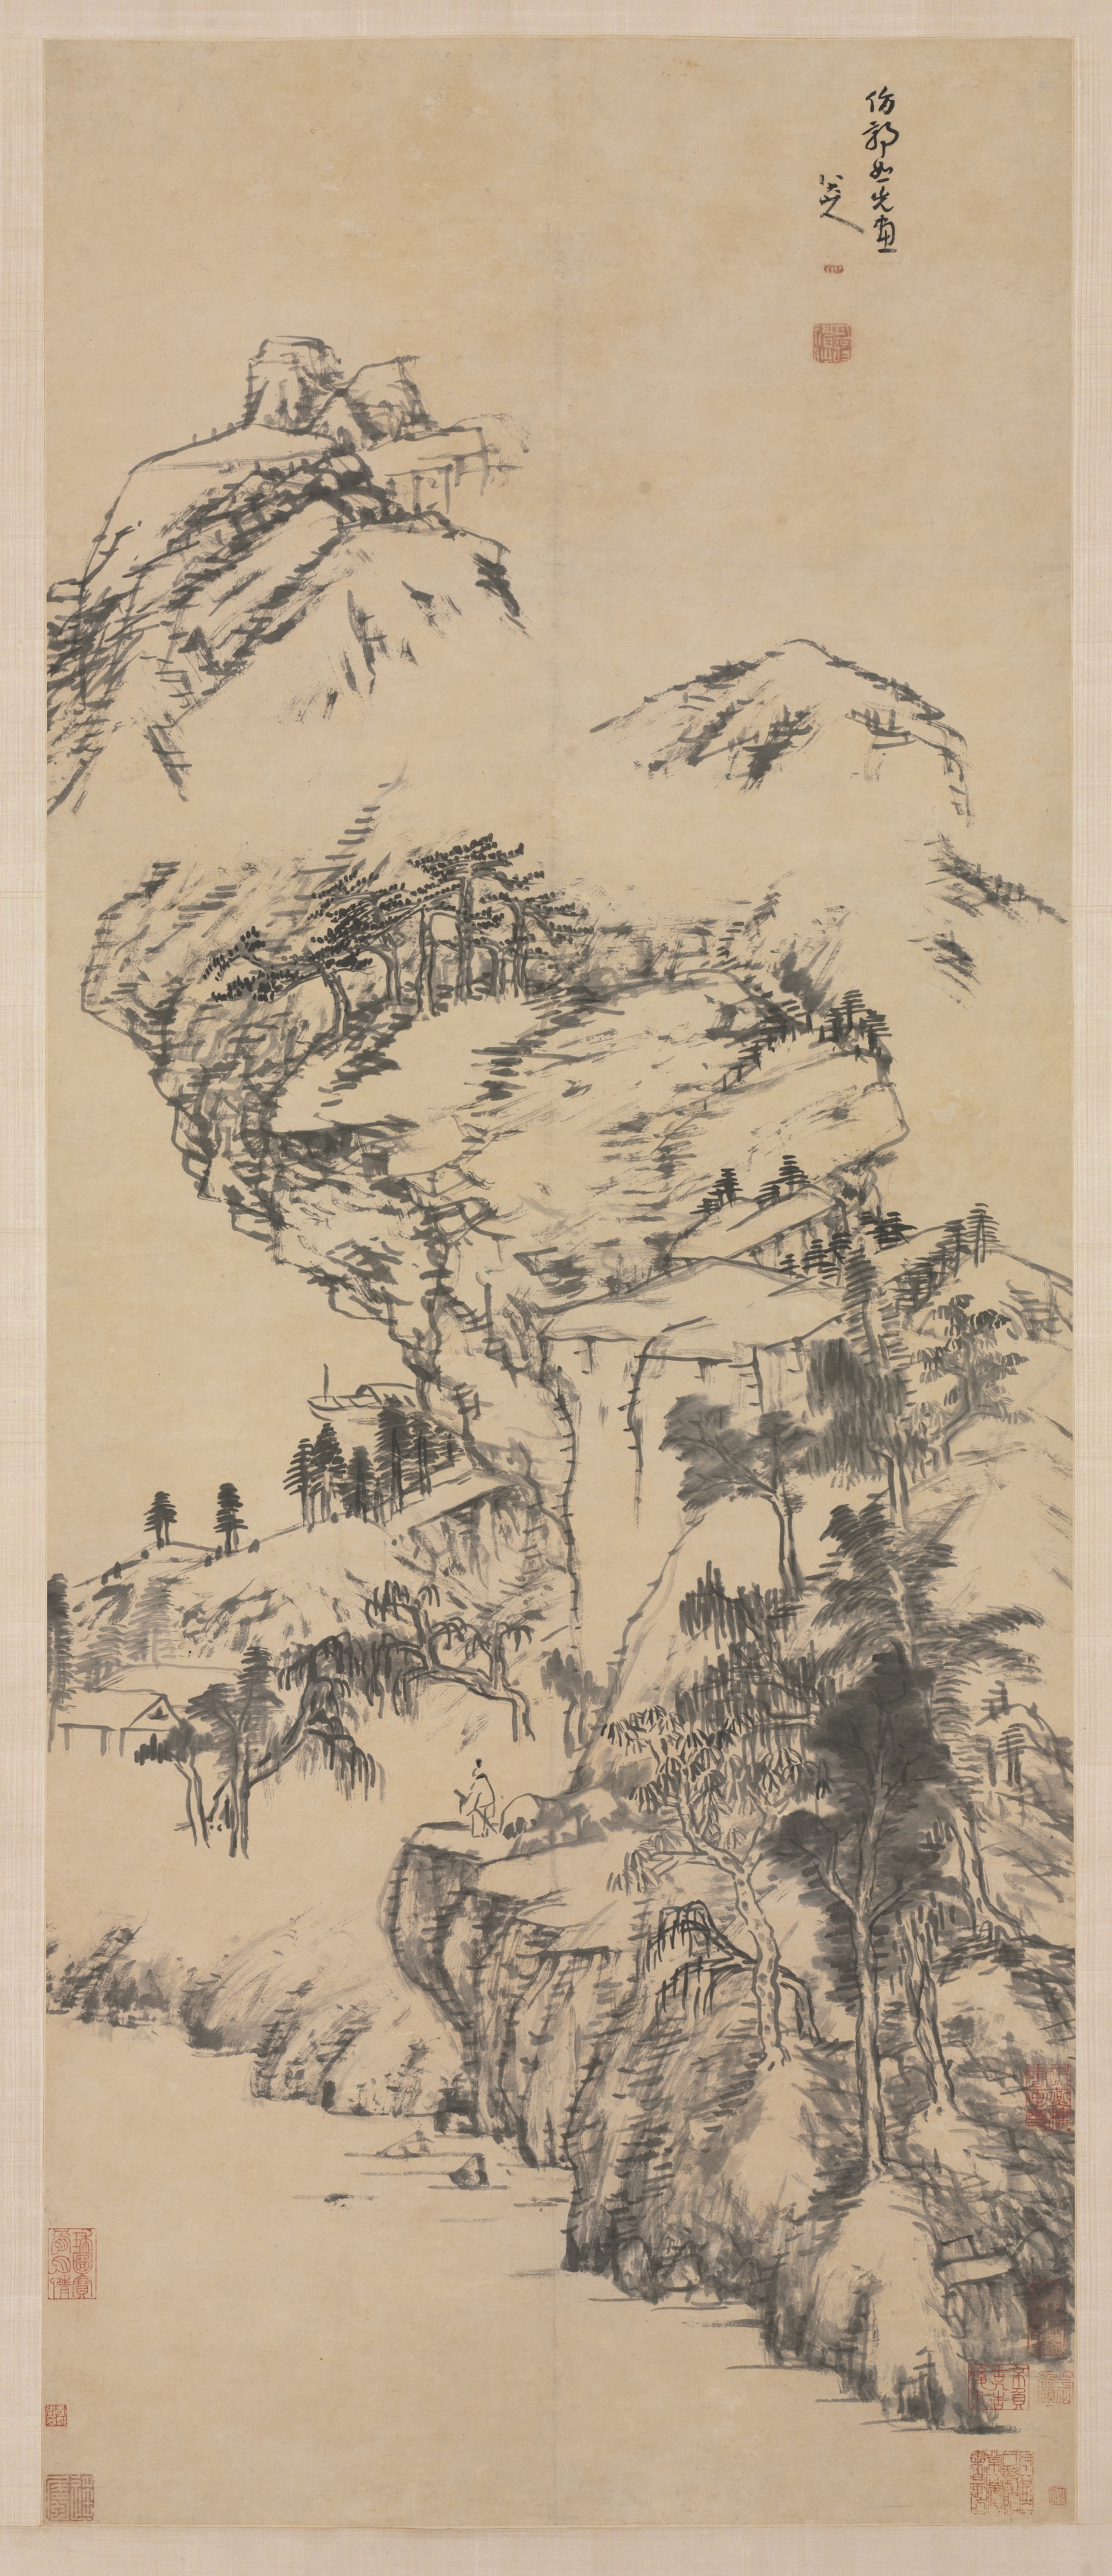 236 1955.36 chu ta landscape after kuo chung-shu 17c ch'ing.jpg